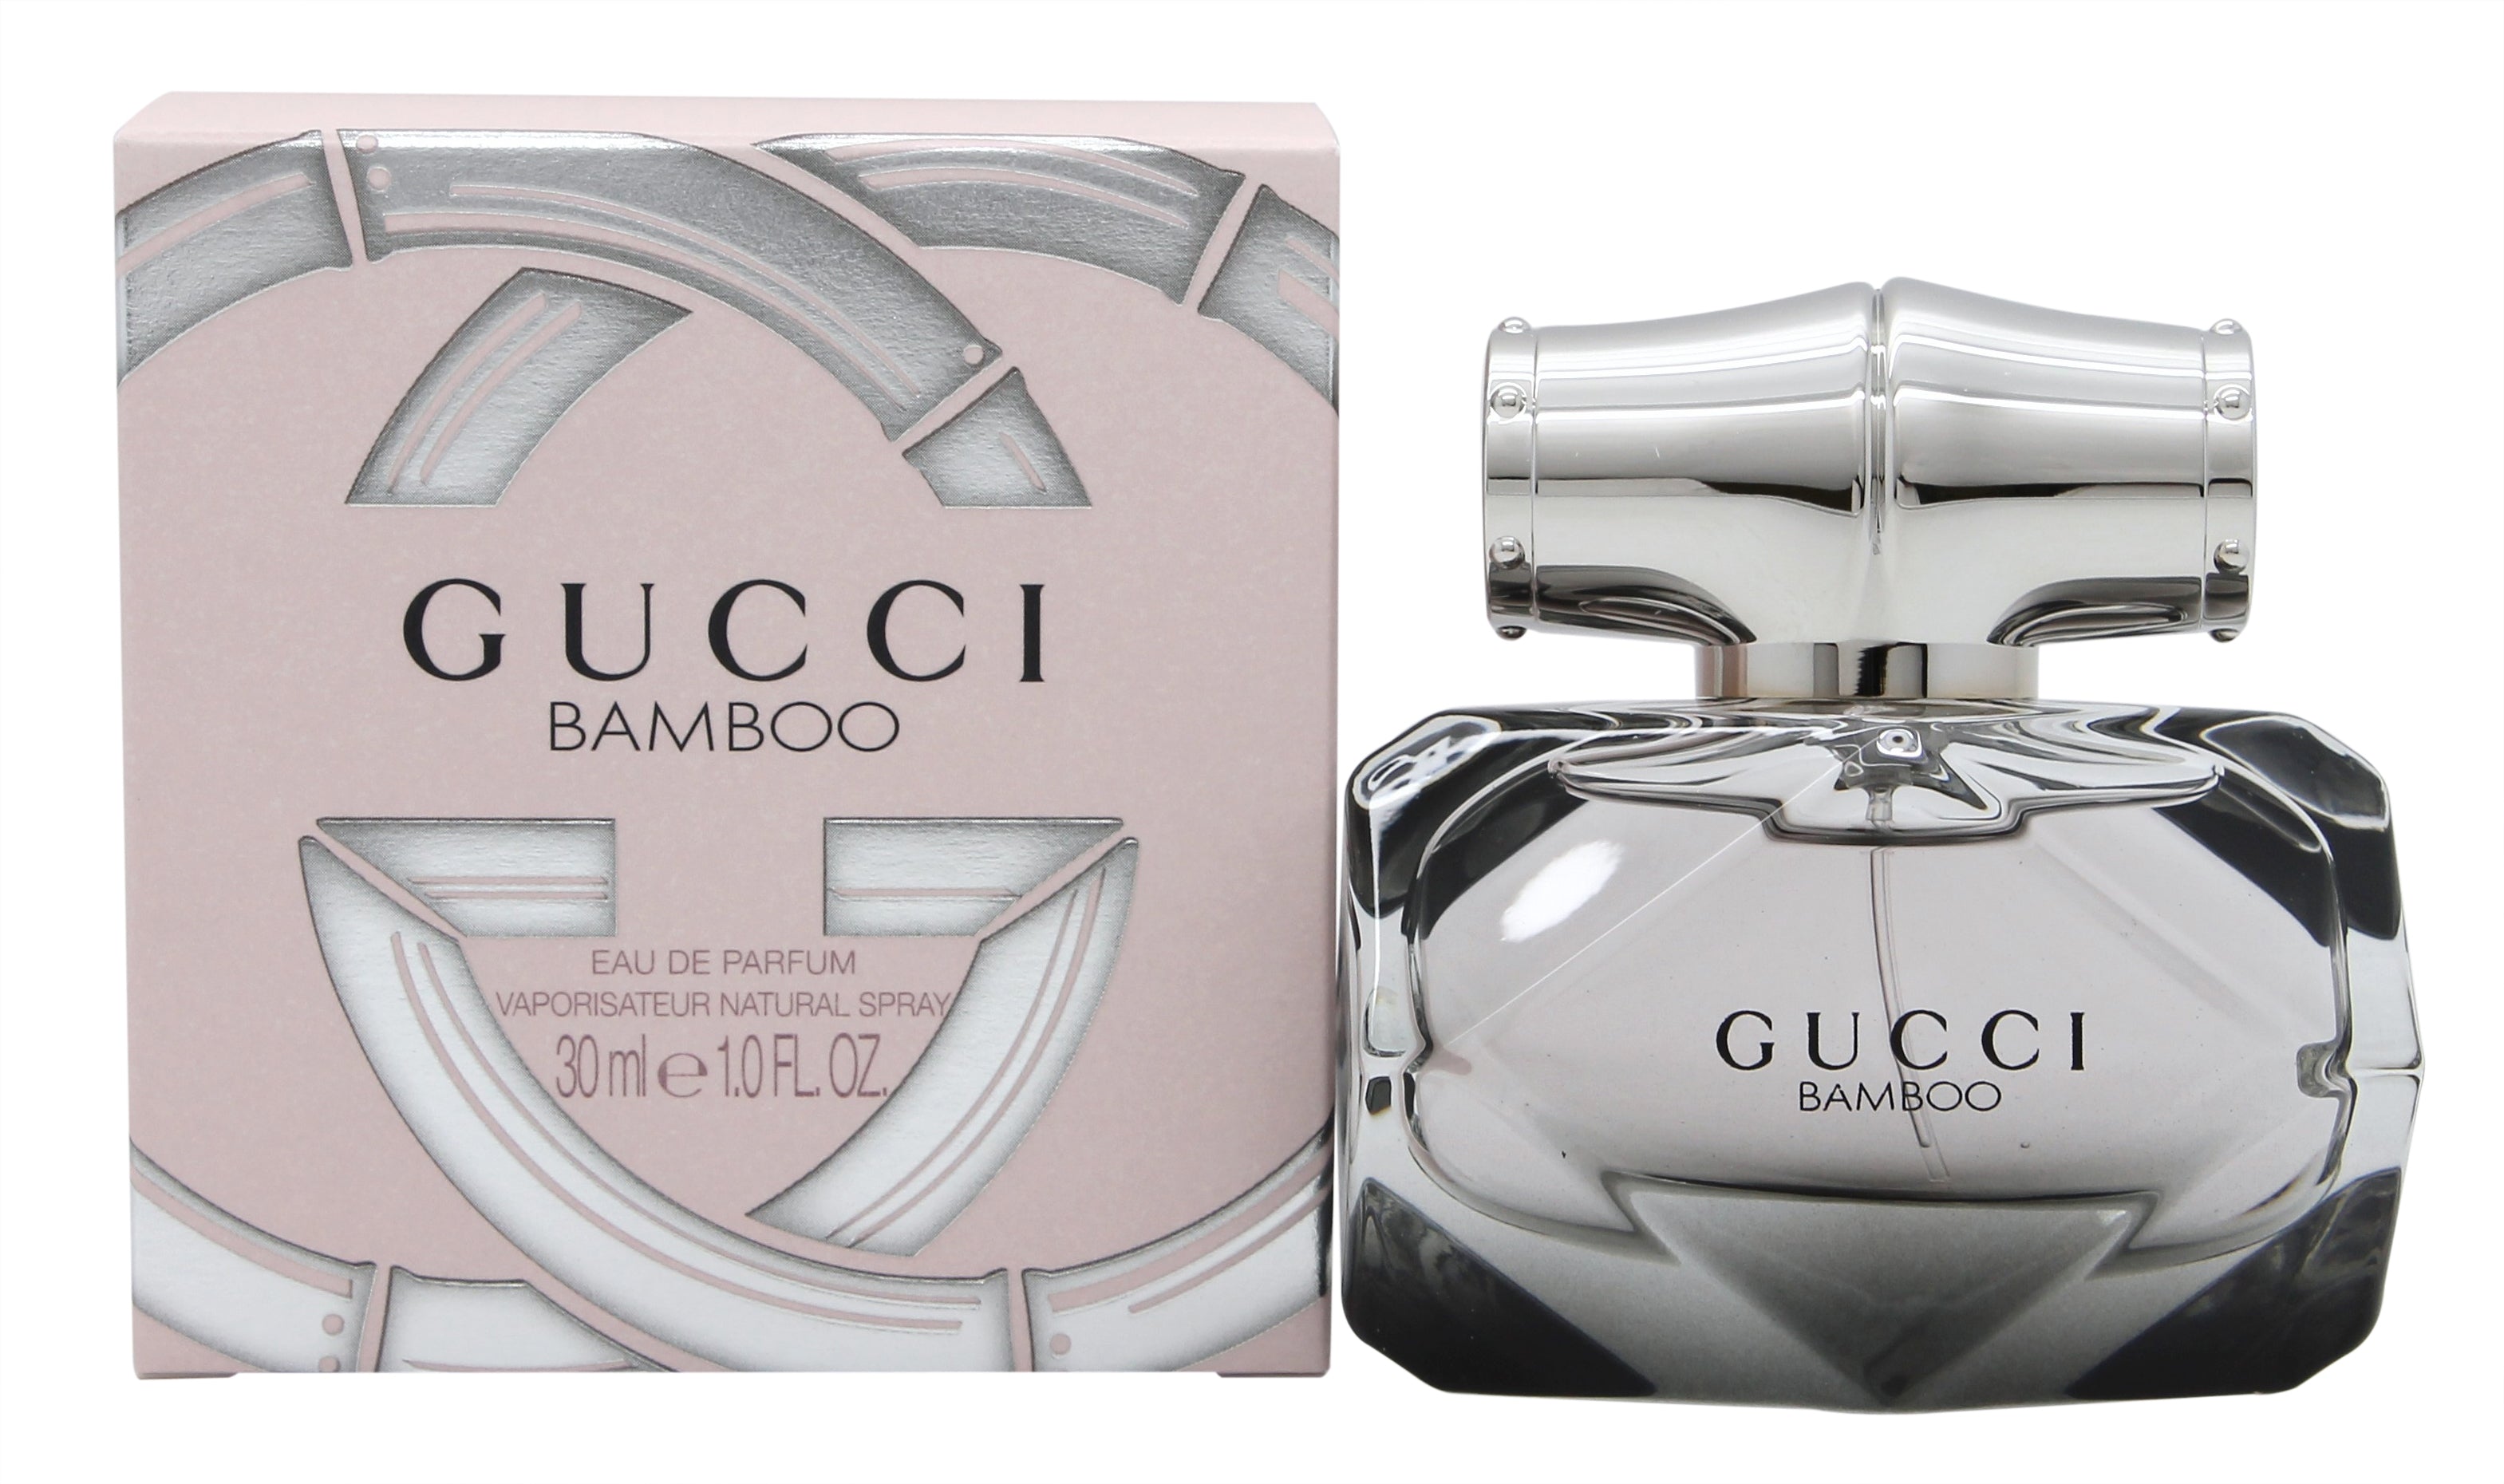 View Gucci Bamboo Eau de Parfum 30ml Spray information